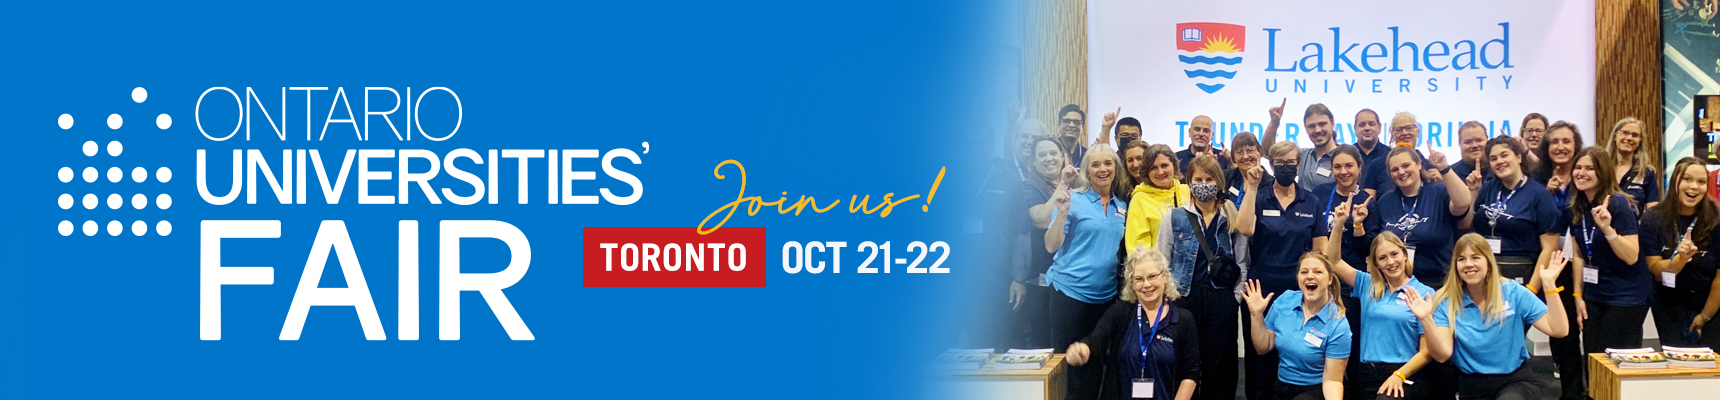 Ontario Universities Fair - Toronto Oct 21-22